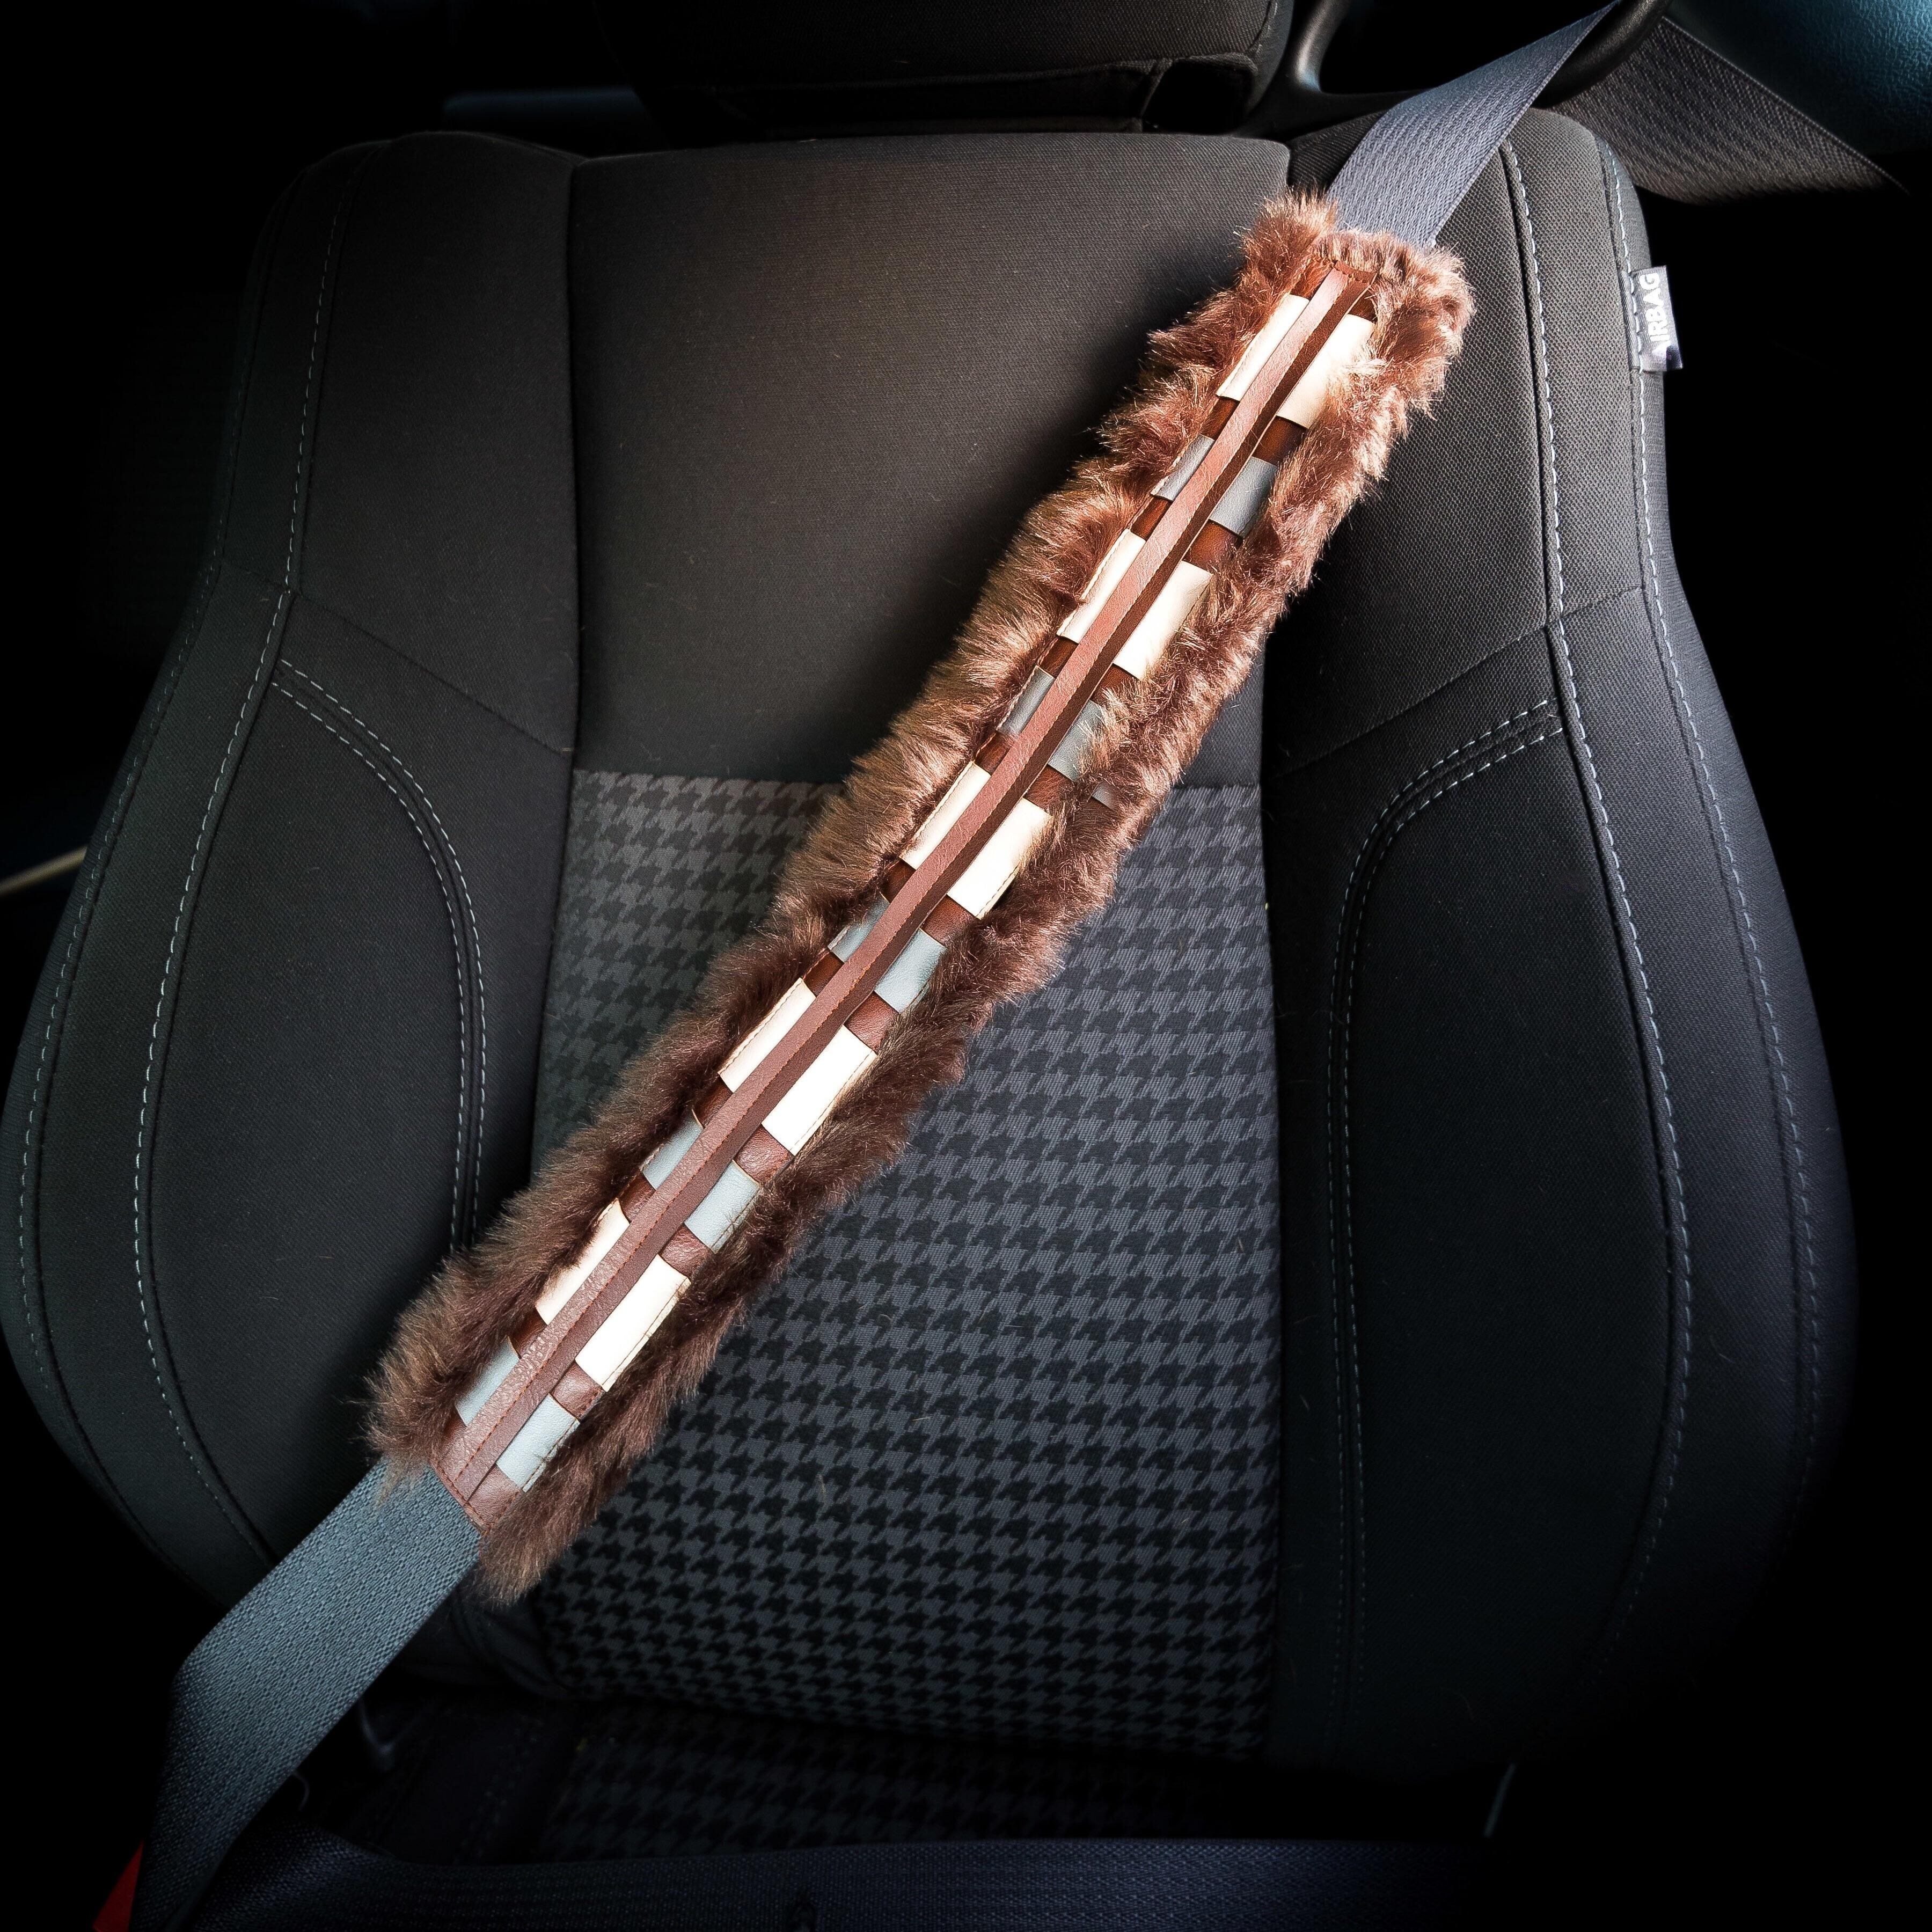 12. Star Wars Chewbacca Seat Belt Cover